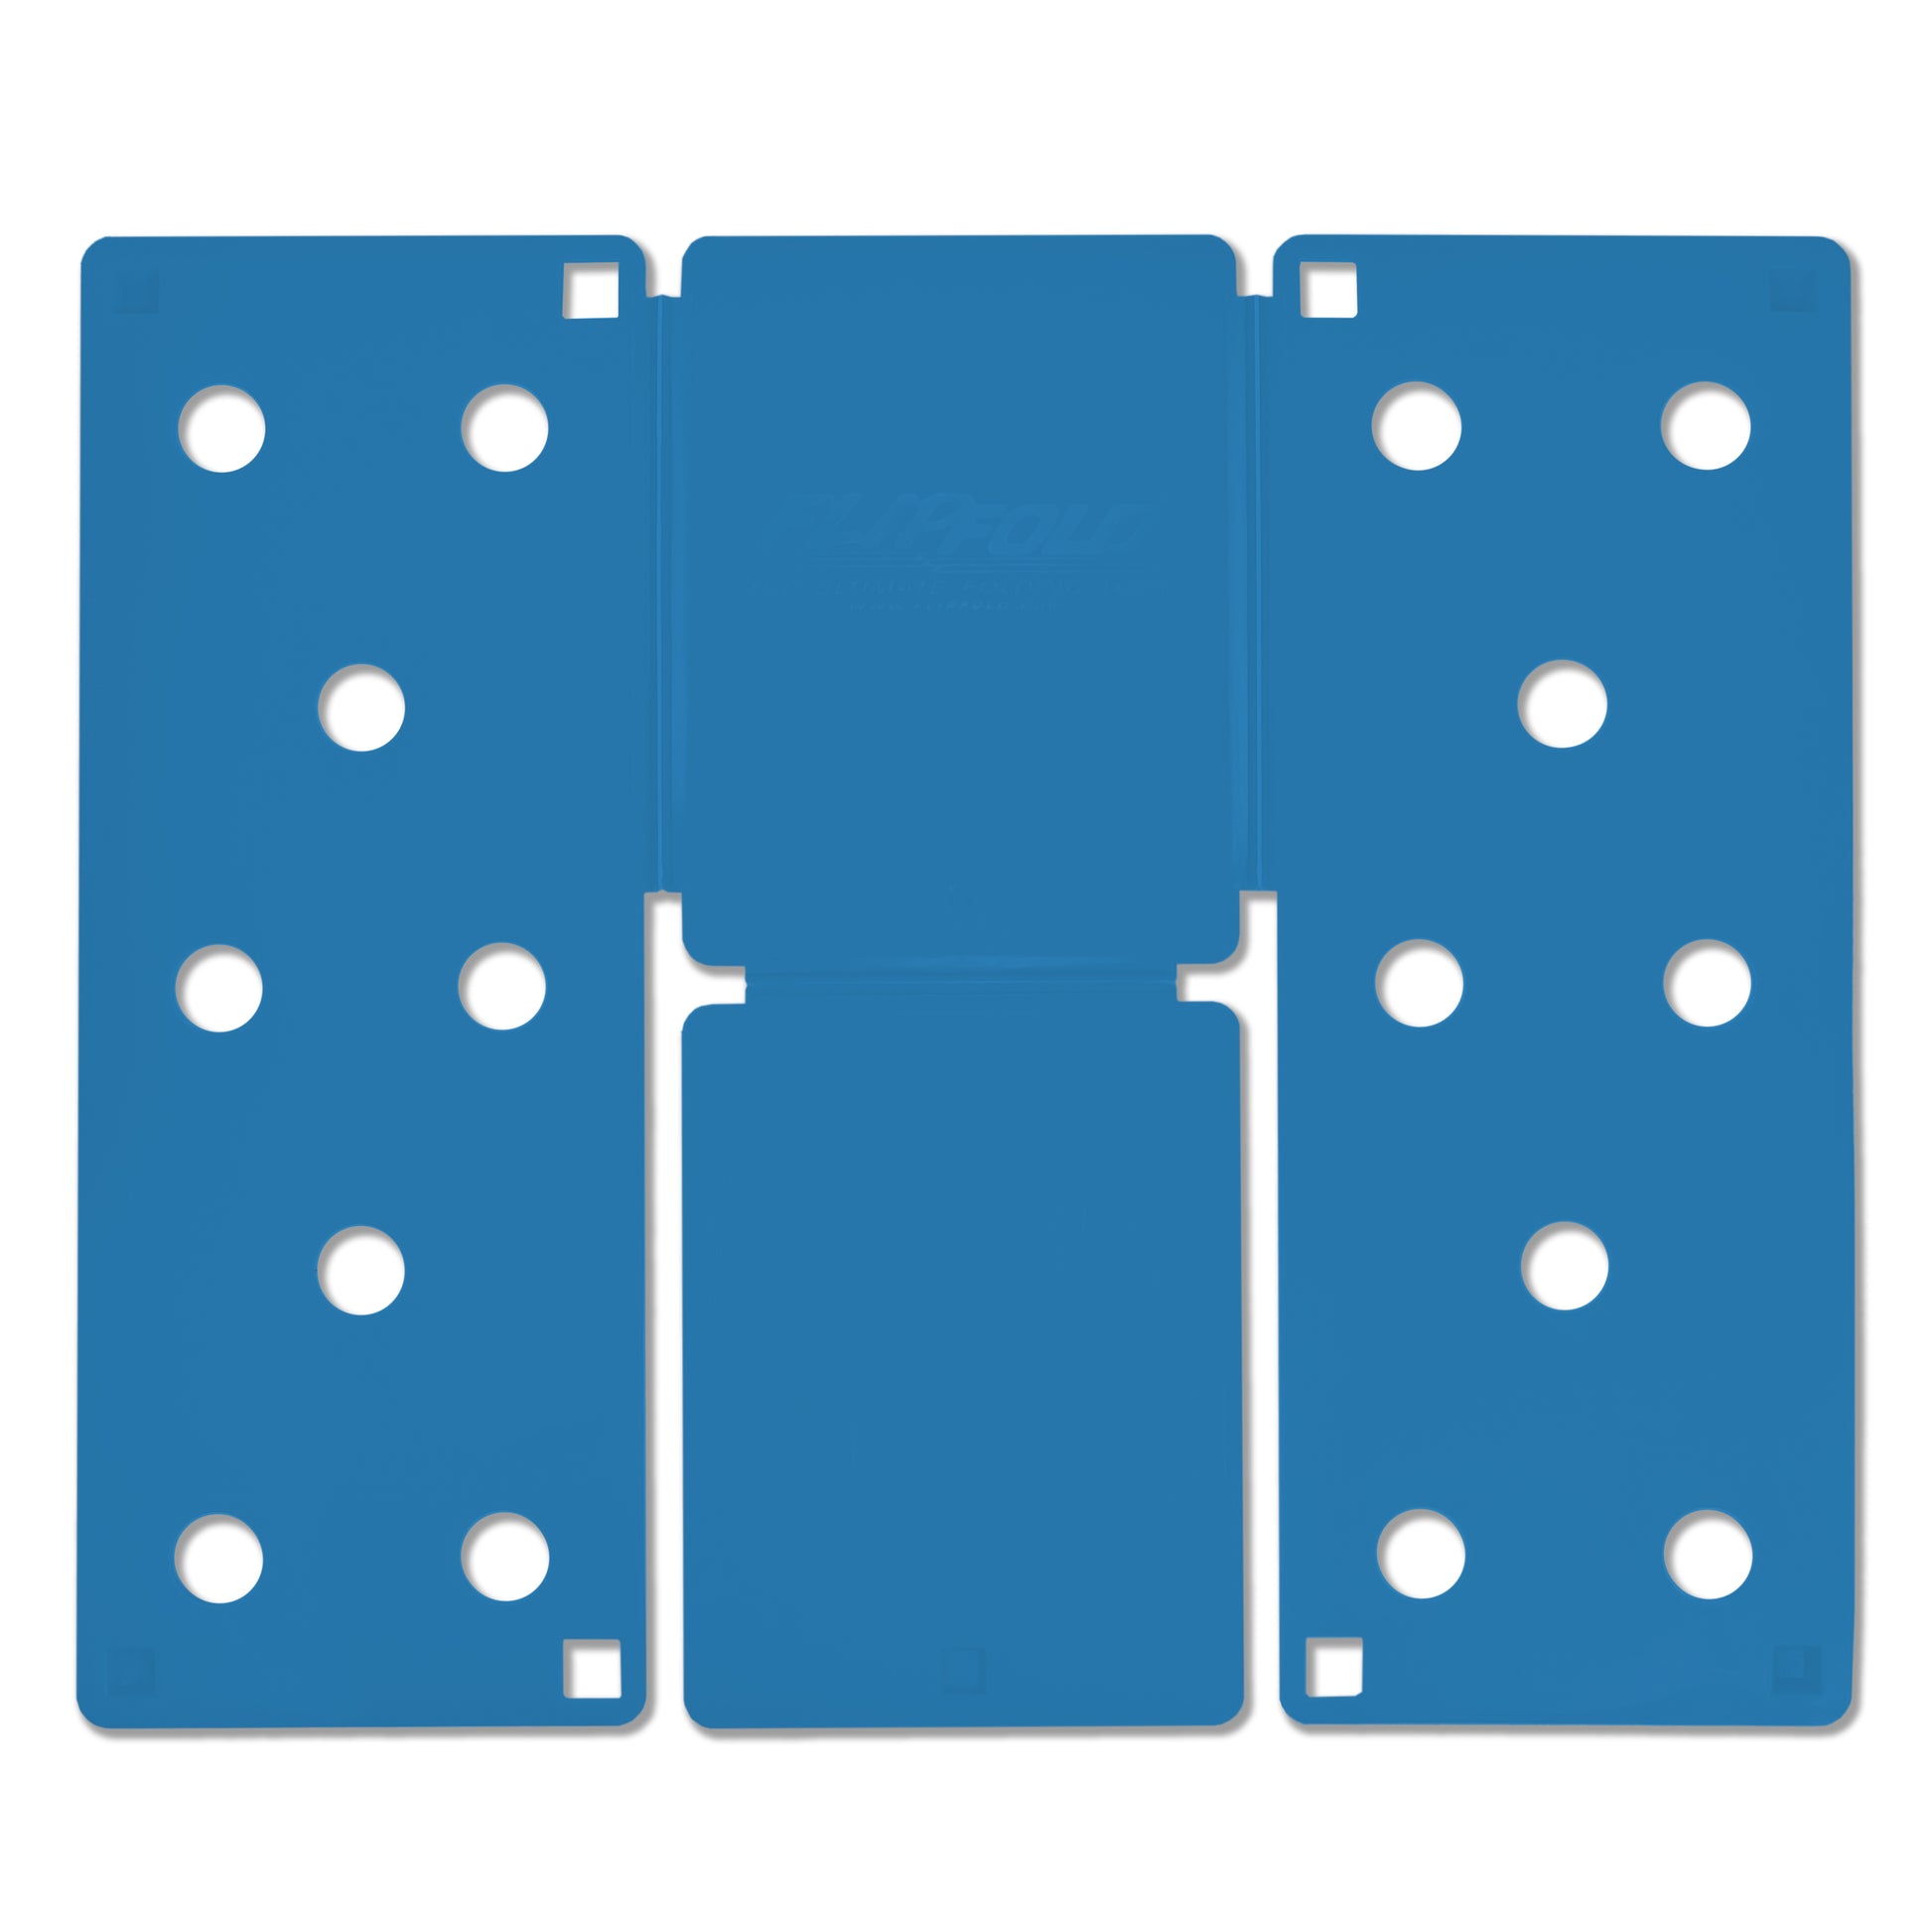 FlipFold Laundry Folding Board Tool - Adult Light Blue